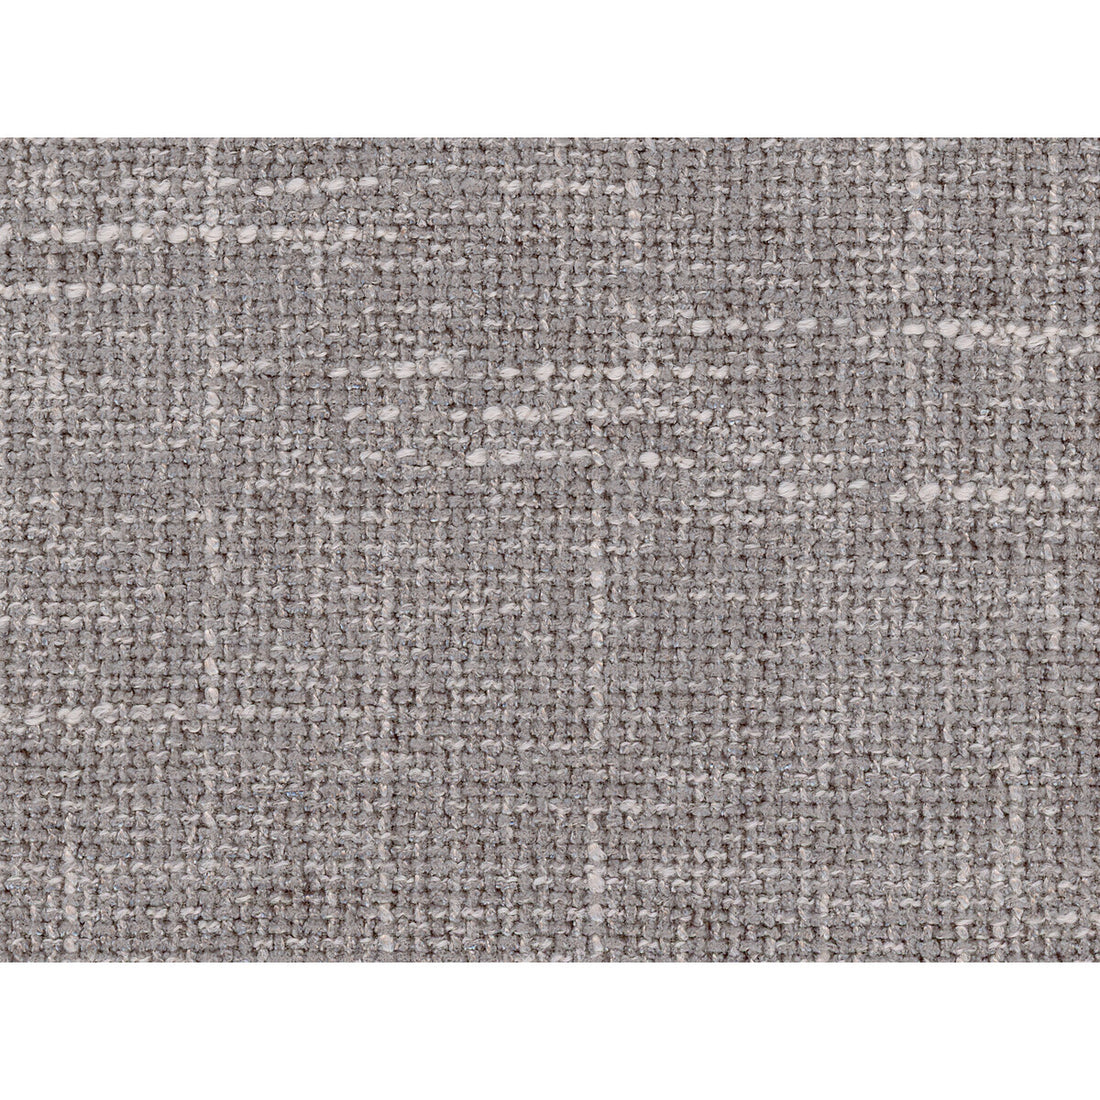 Sant Elm fabric in quartz color - pattern 35075.1121.0 - by Kravet Design in the Alexa Hampton Mallorca collection